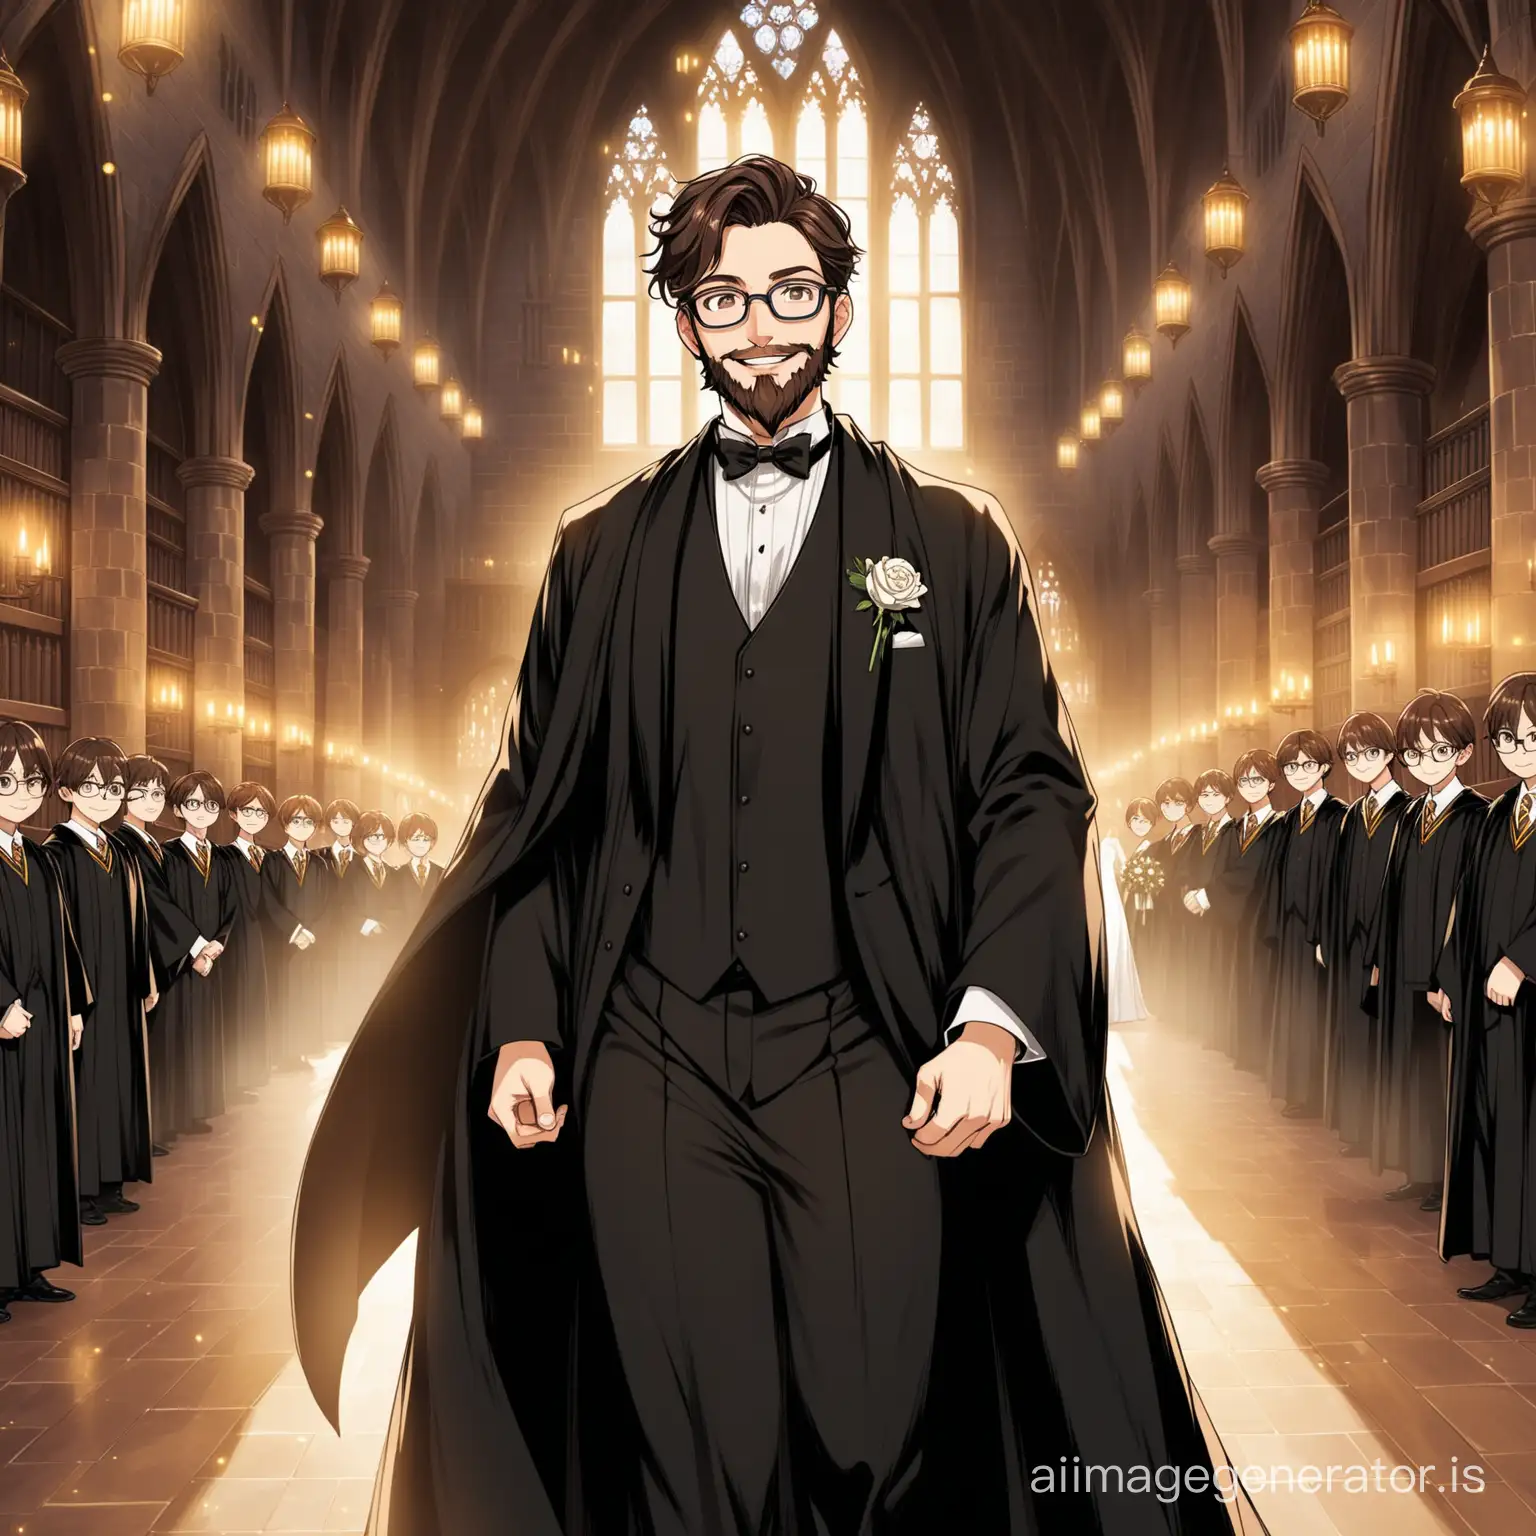 Joyful-Anime-Groom-in-Hogwarts-Robes-and-Tuxedo